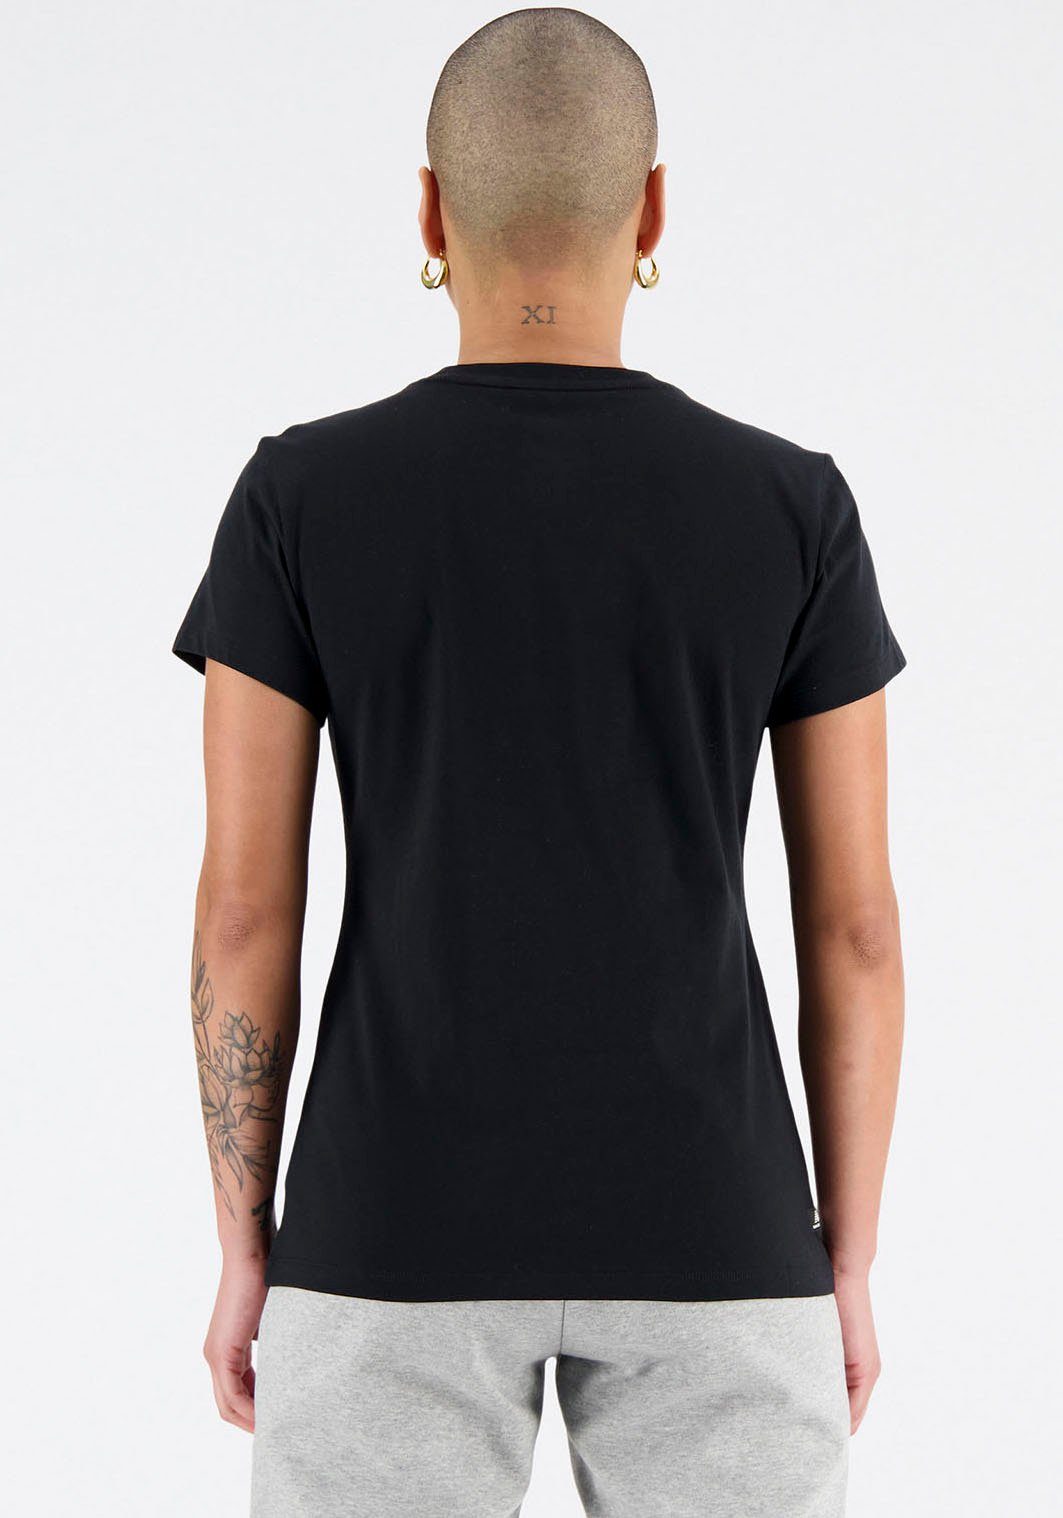 New 001 black Balance T-Shirt